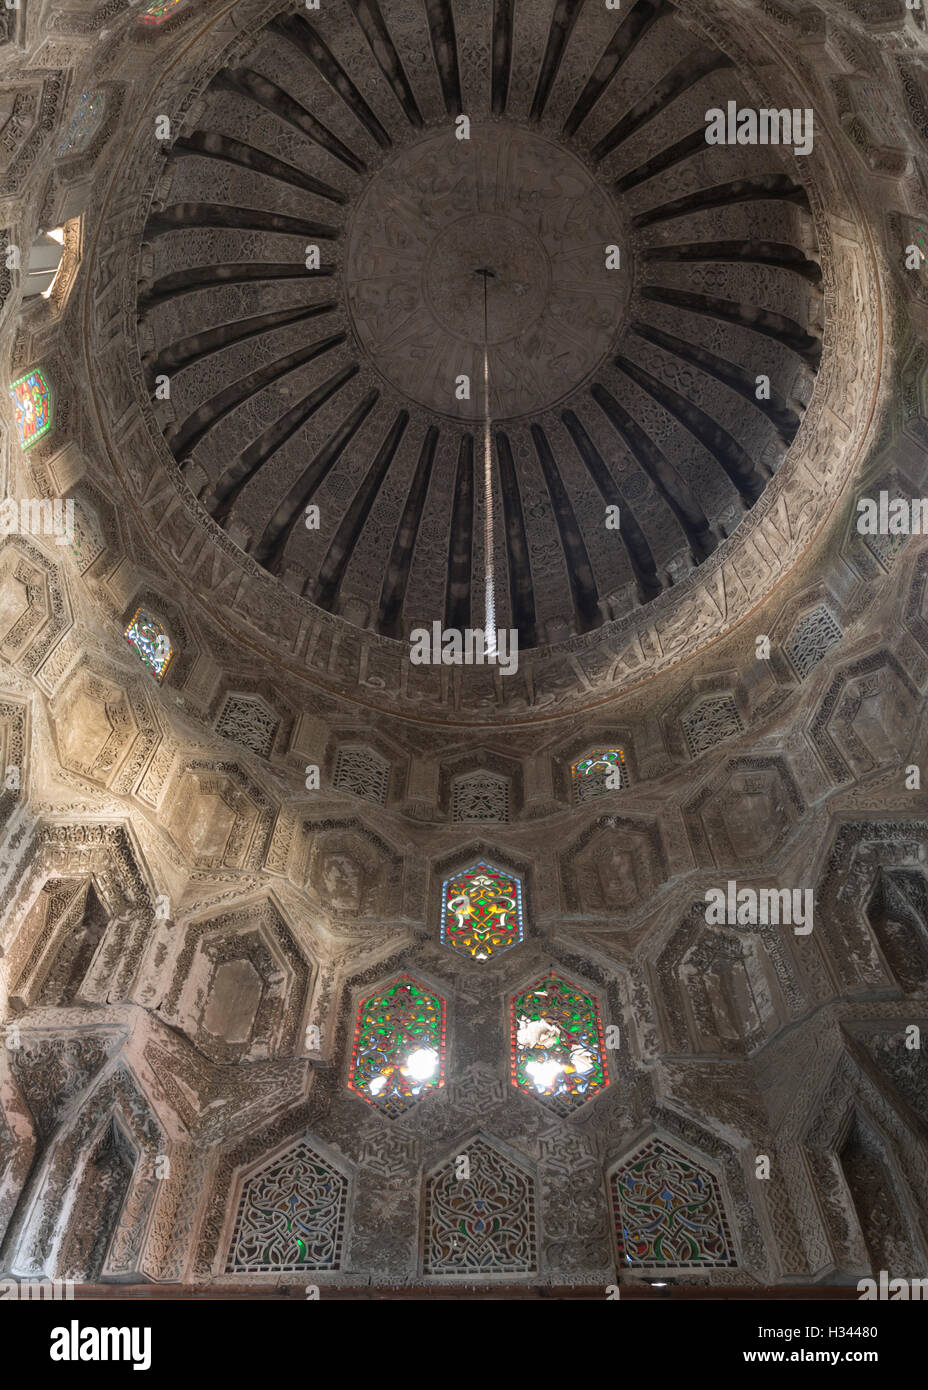 Dome of mausoleum of Shaikh Zayn al-Din Yusuf, Cairo, Egypt Stock Photo